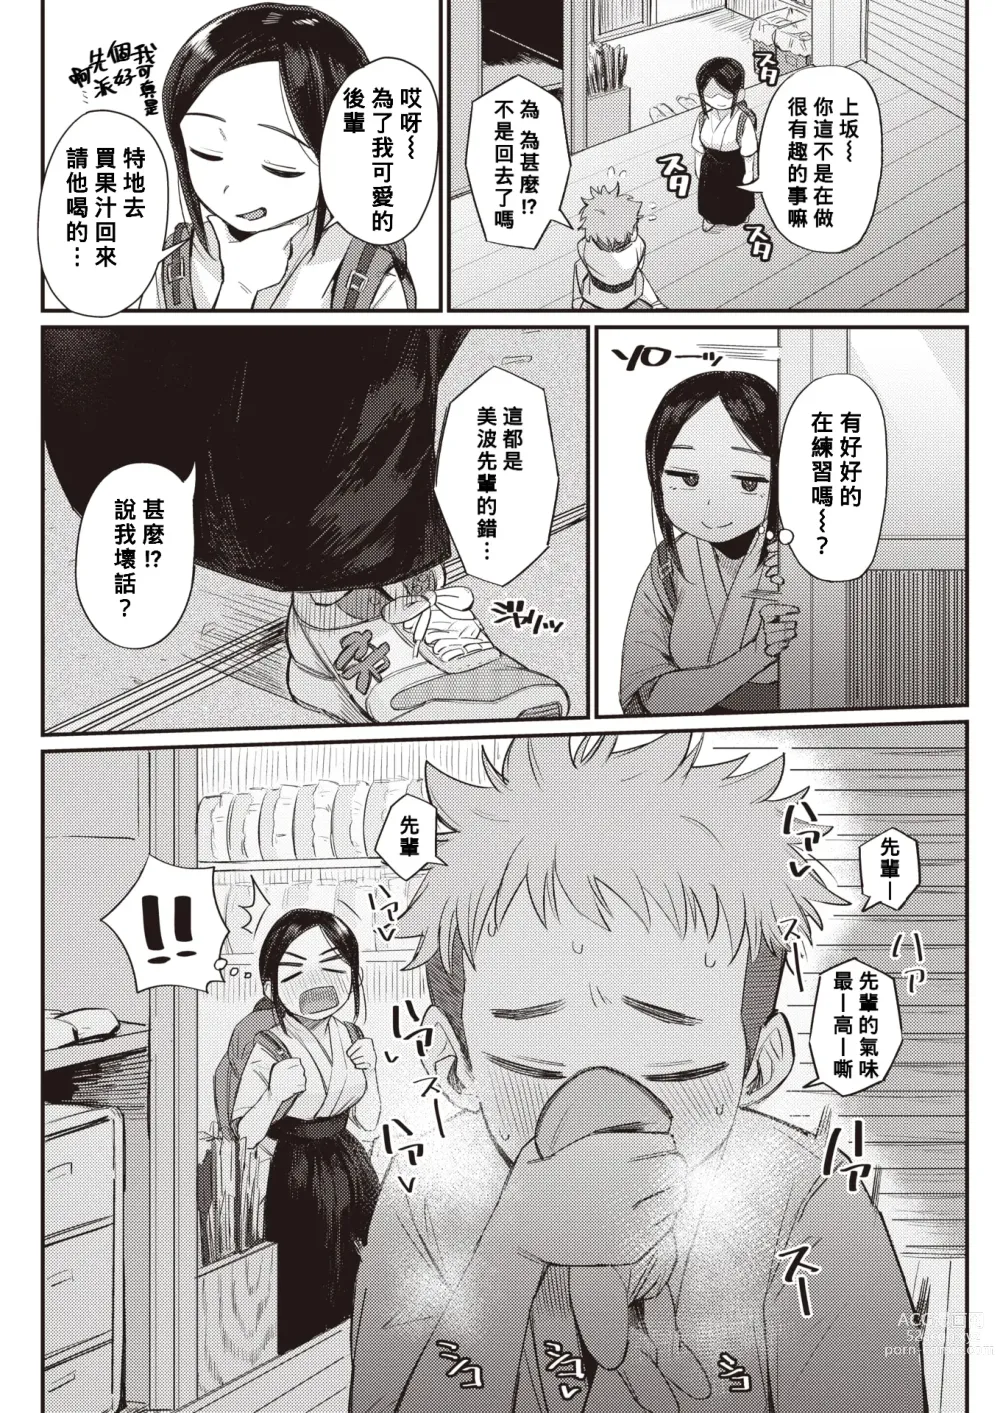 Page 4 of manga Koi no Nioi♡